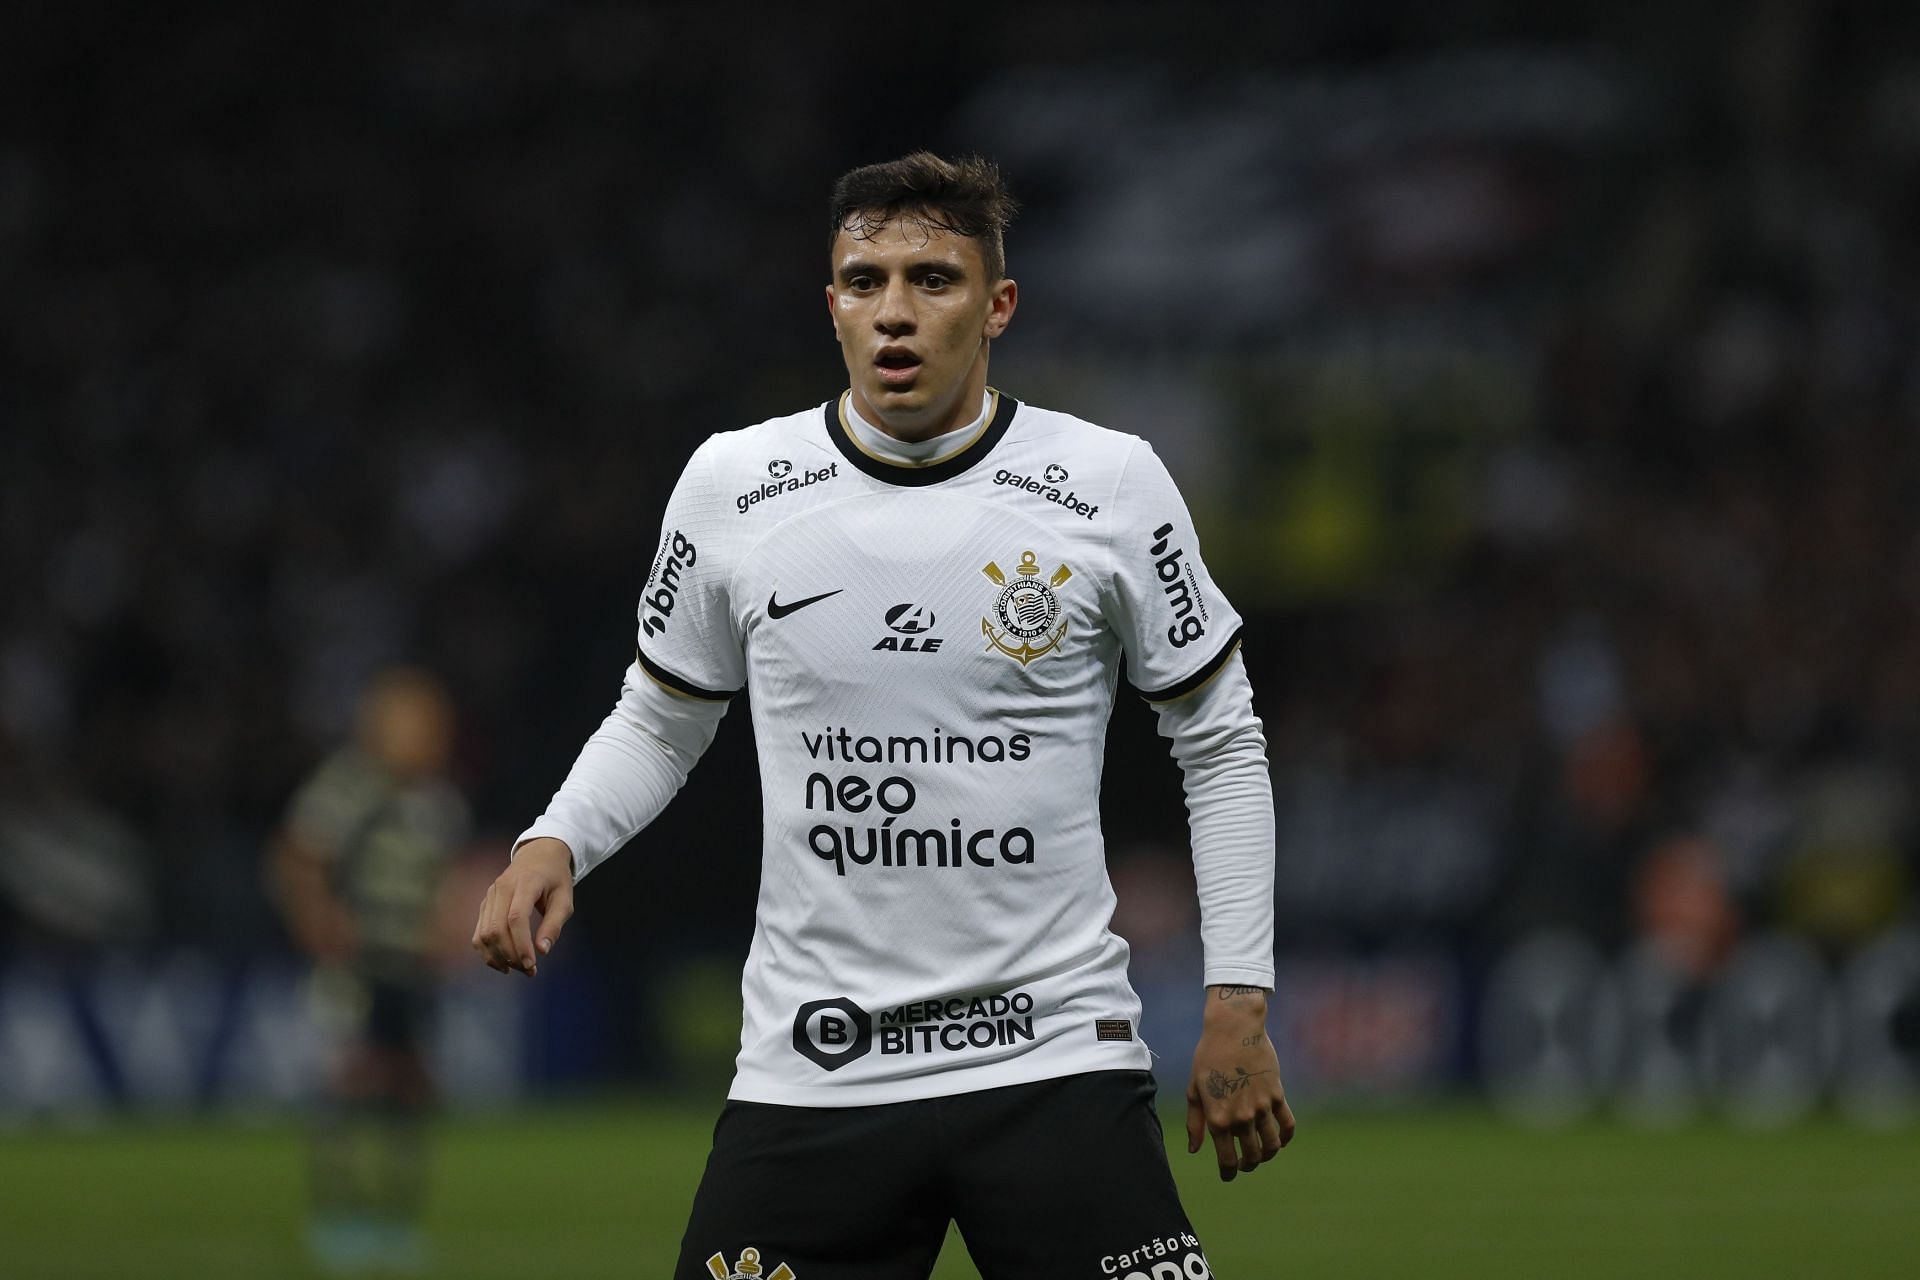 Corinthians will face Ceara on Saturday - Brasileirao 2022